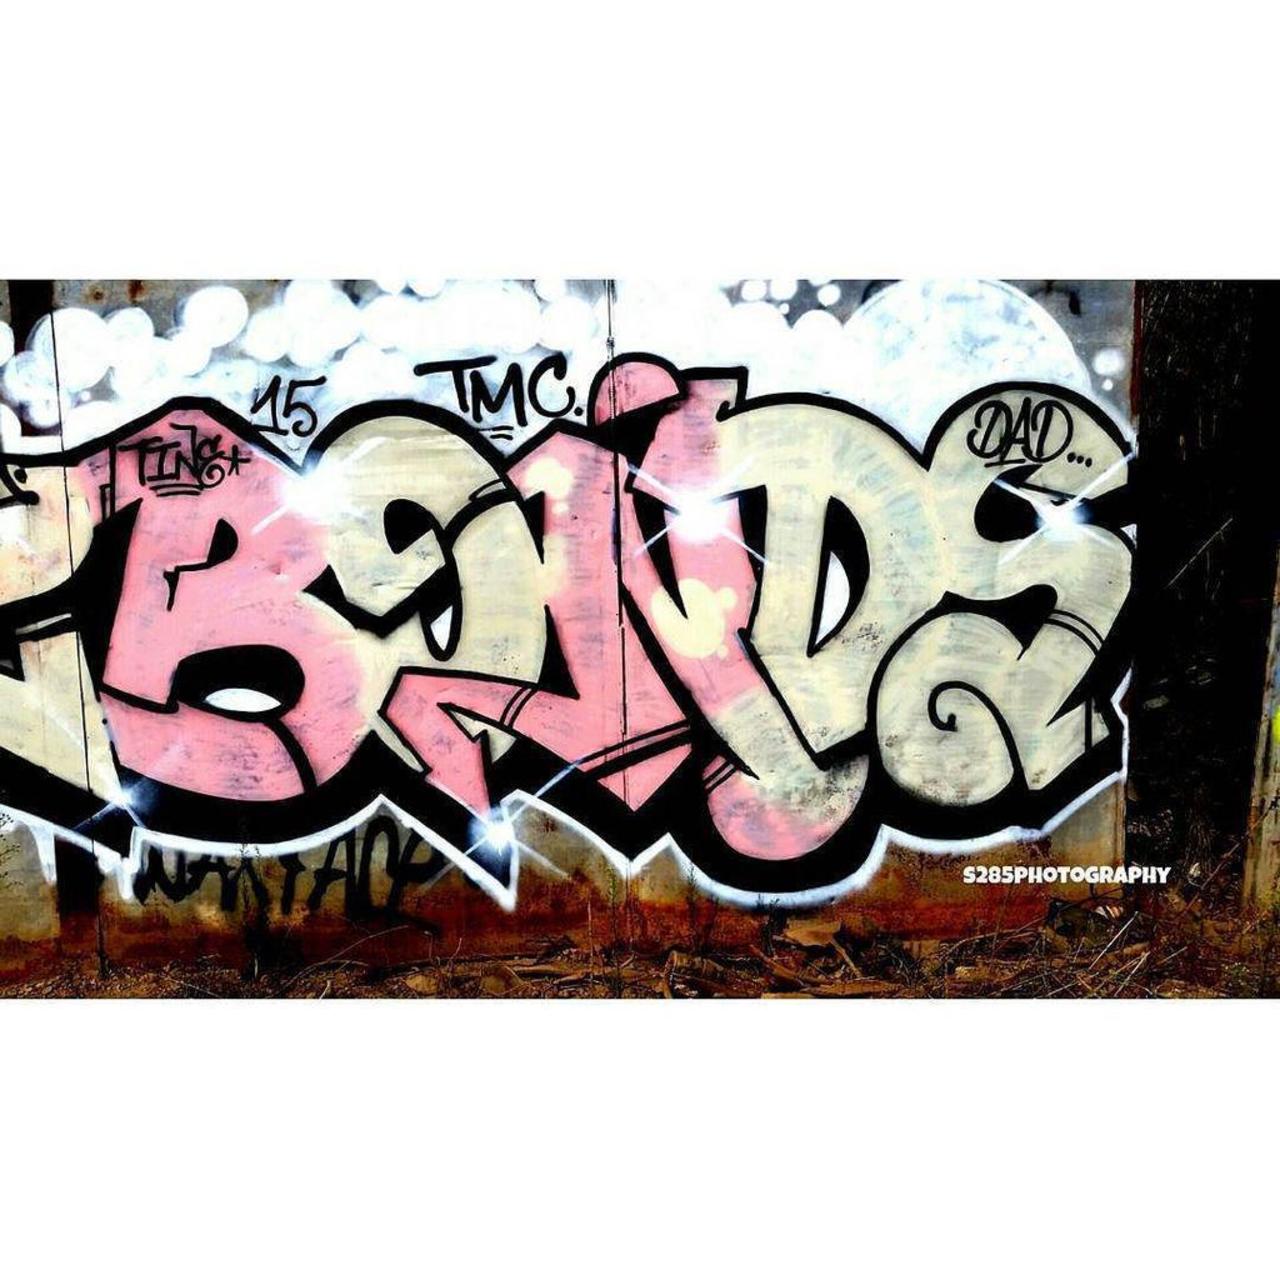 via #fresh2defart "http://bit.ly/1R2YaHo" #graffiti #streetart http://t.co/4HhdU0XnVS